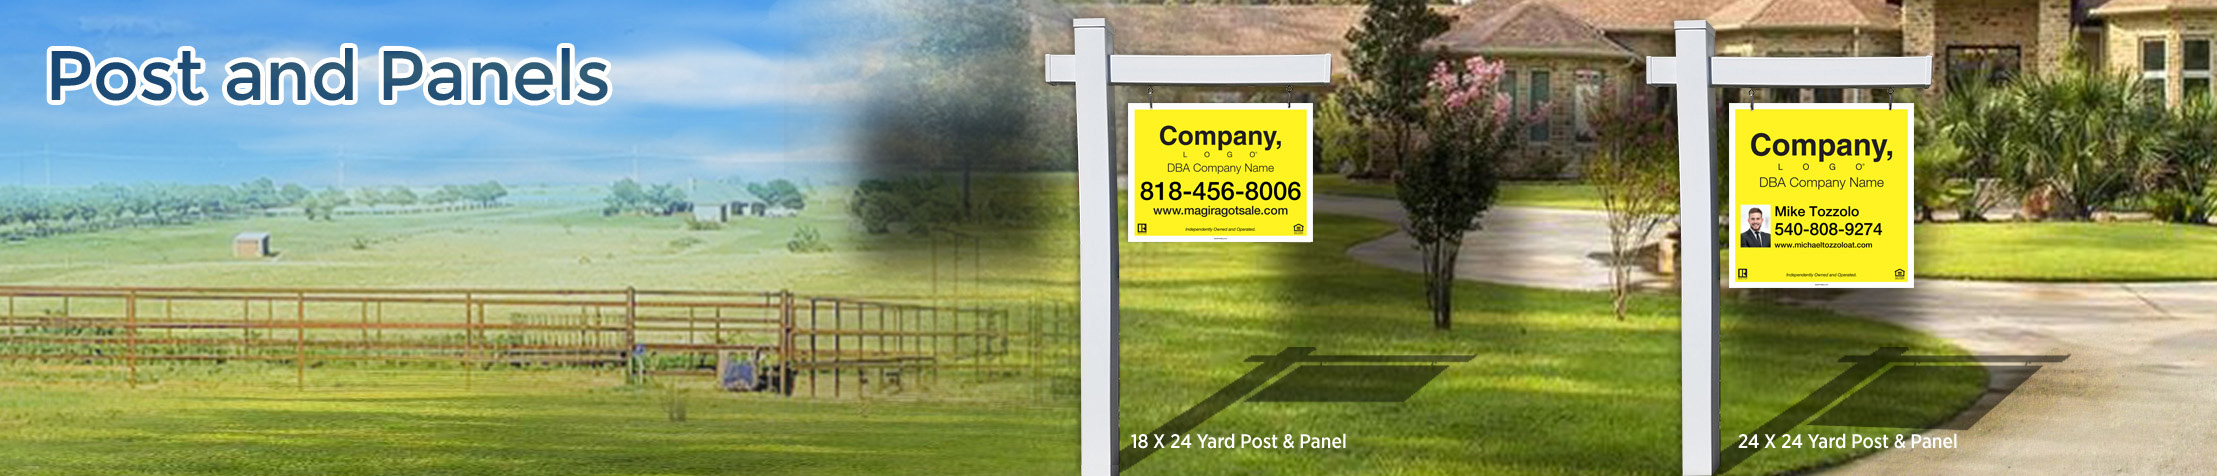 Weichert Real Estate H-Frame Single Rider Units - KW approved vendor real estate signs | BestPrintBuy.com